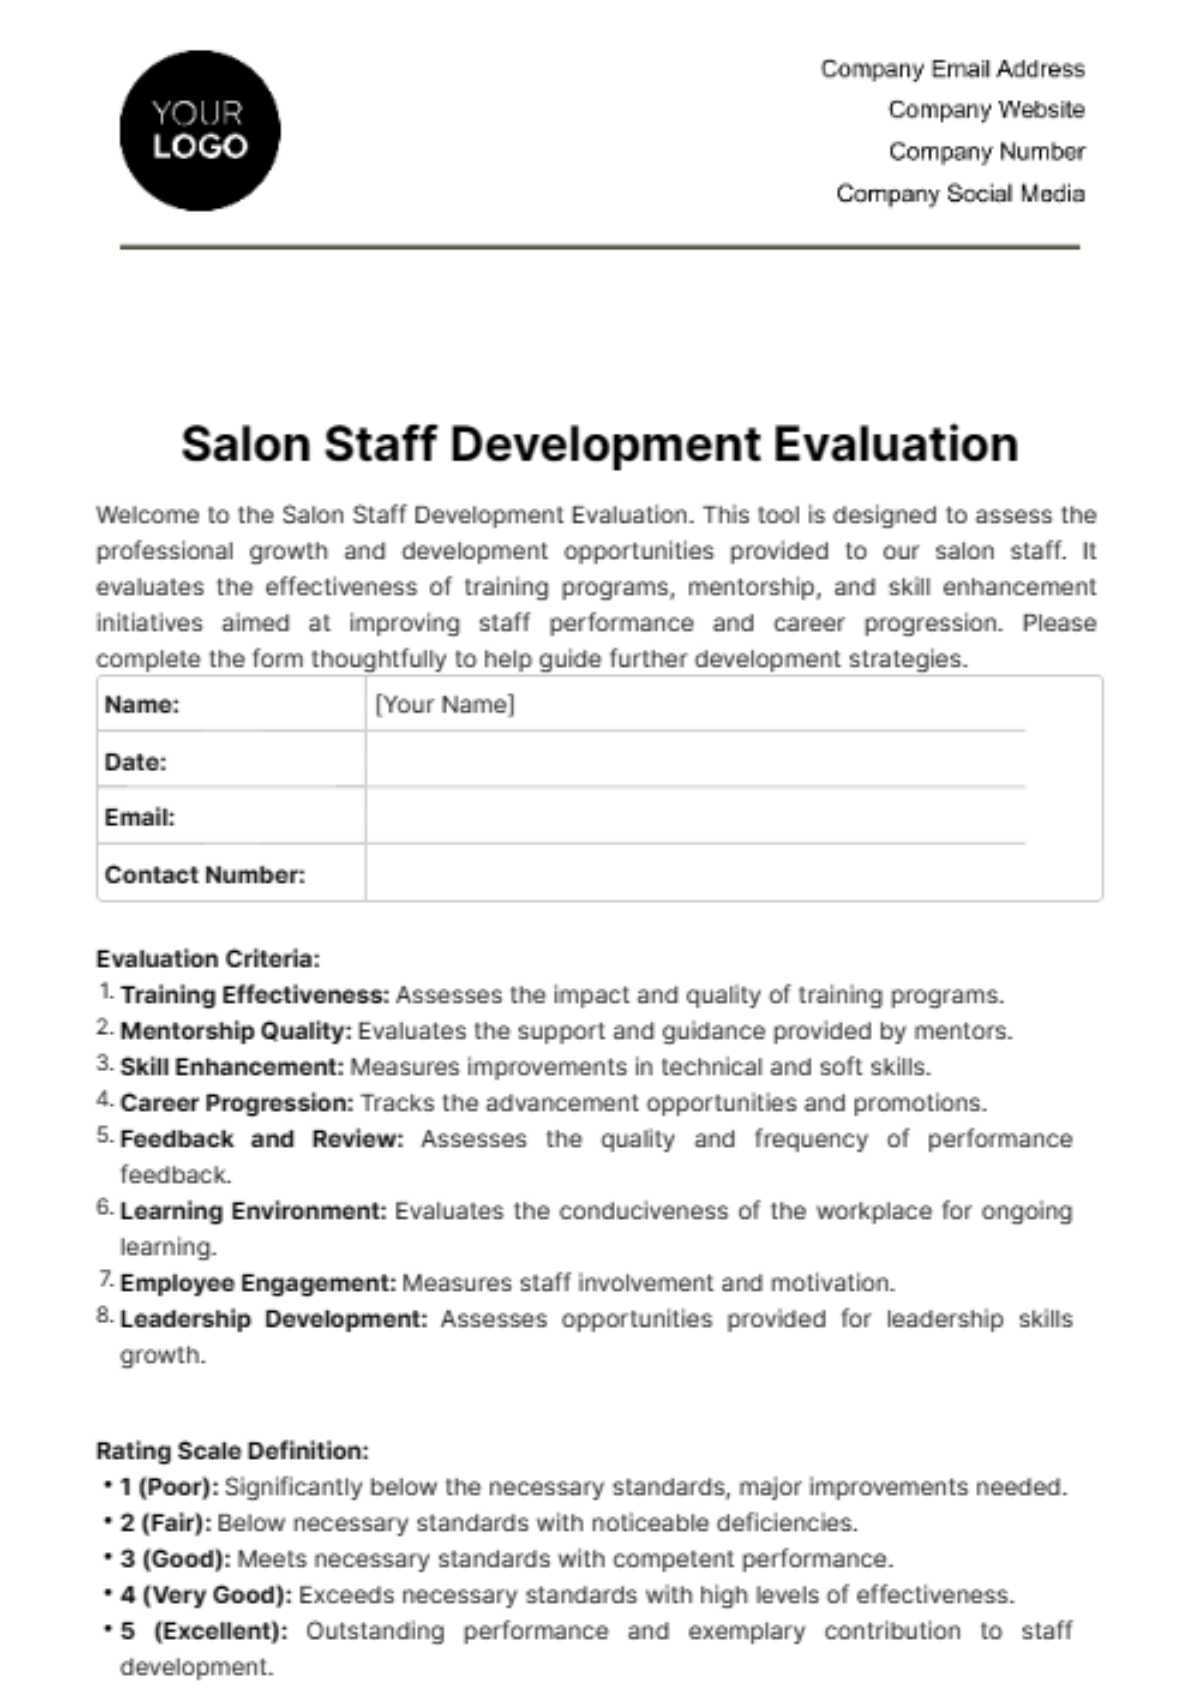 Free Salon Staff Development Evaluation Template